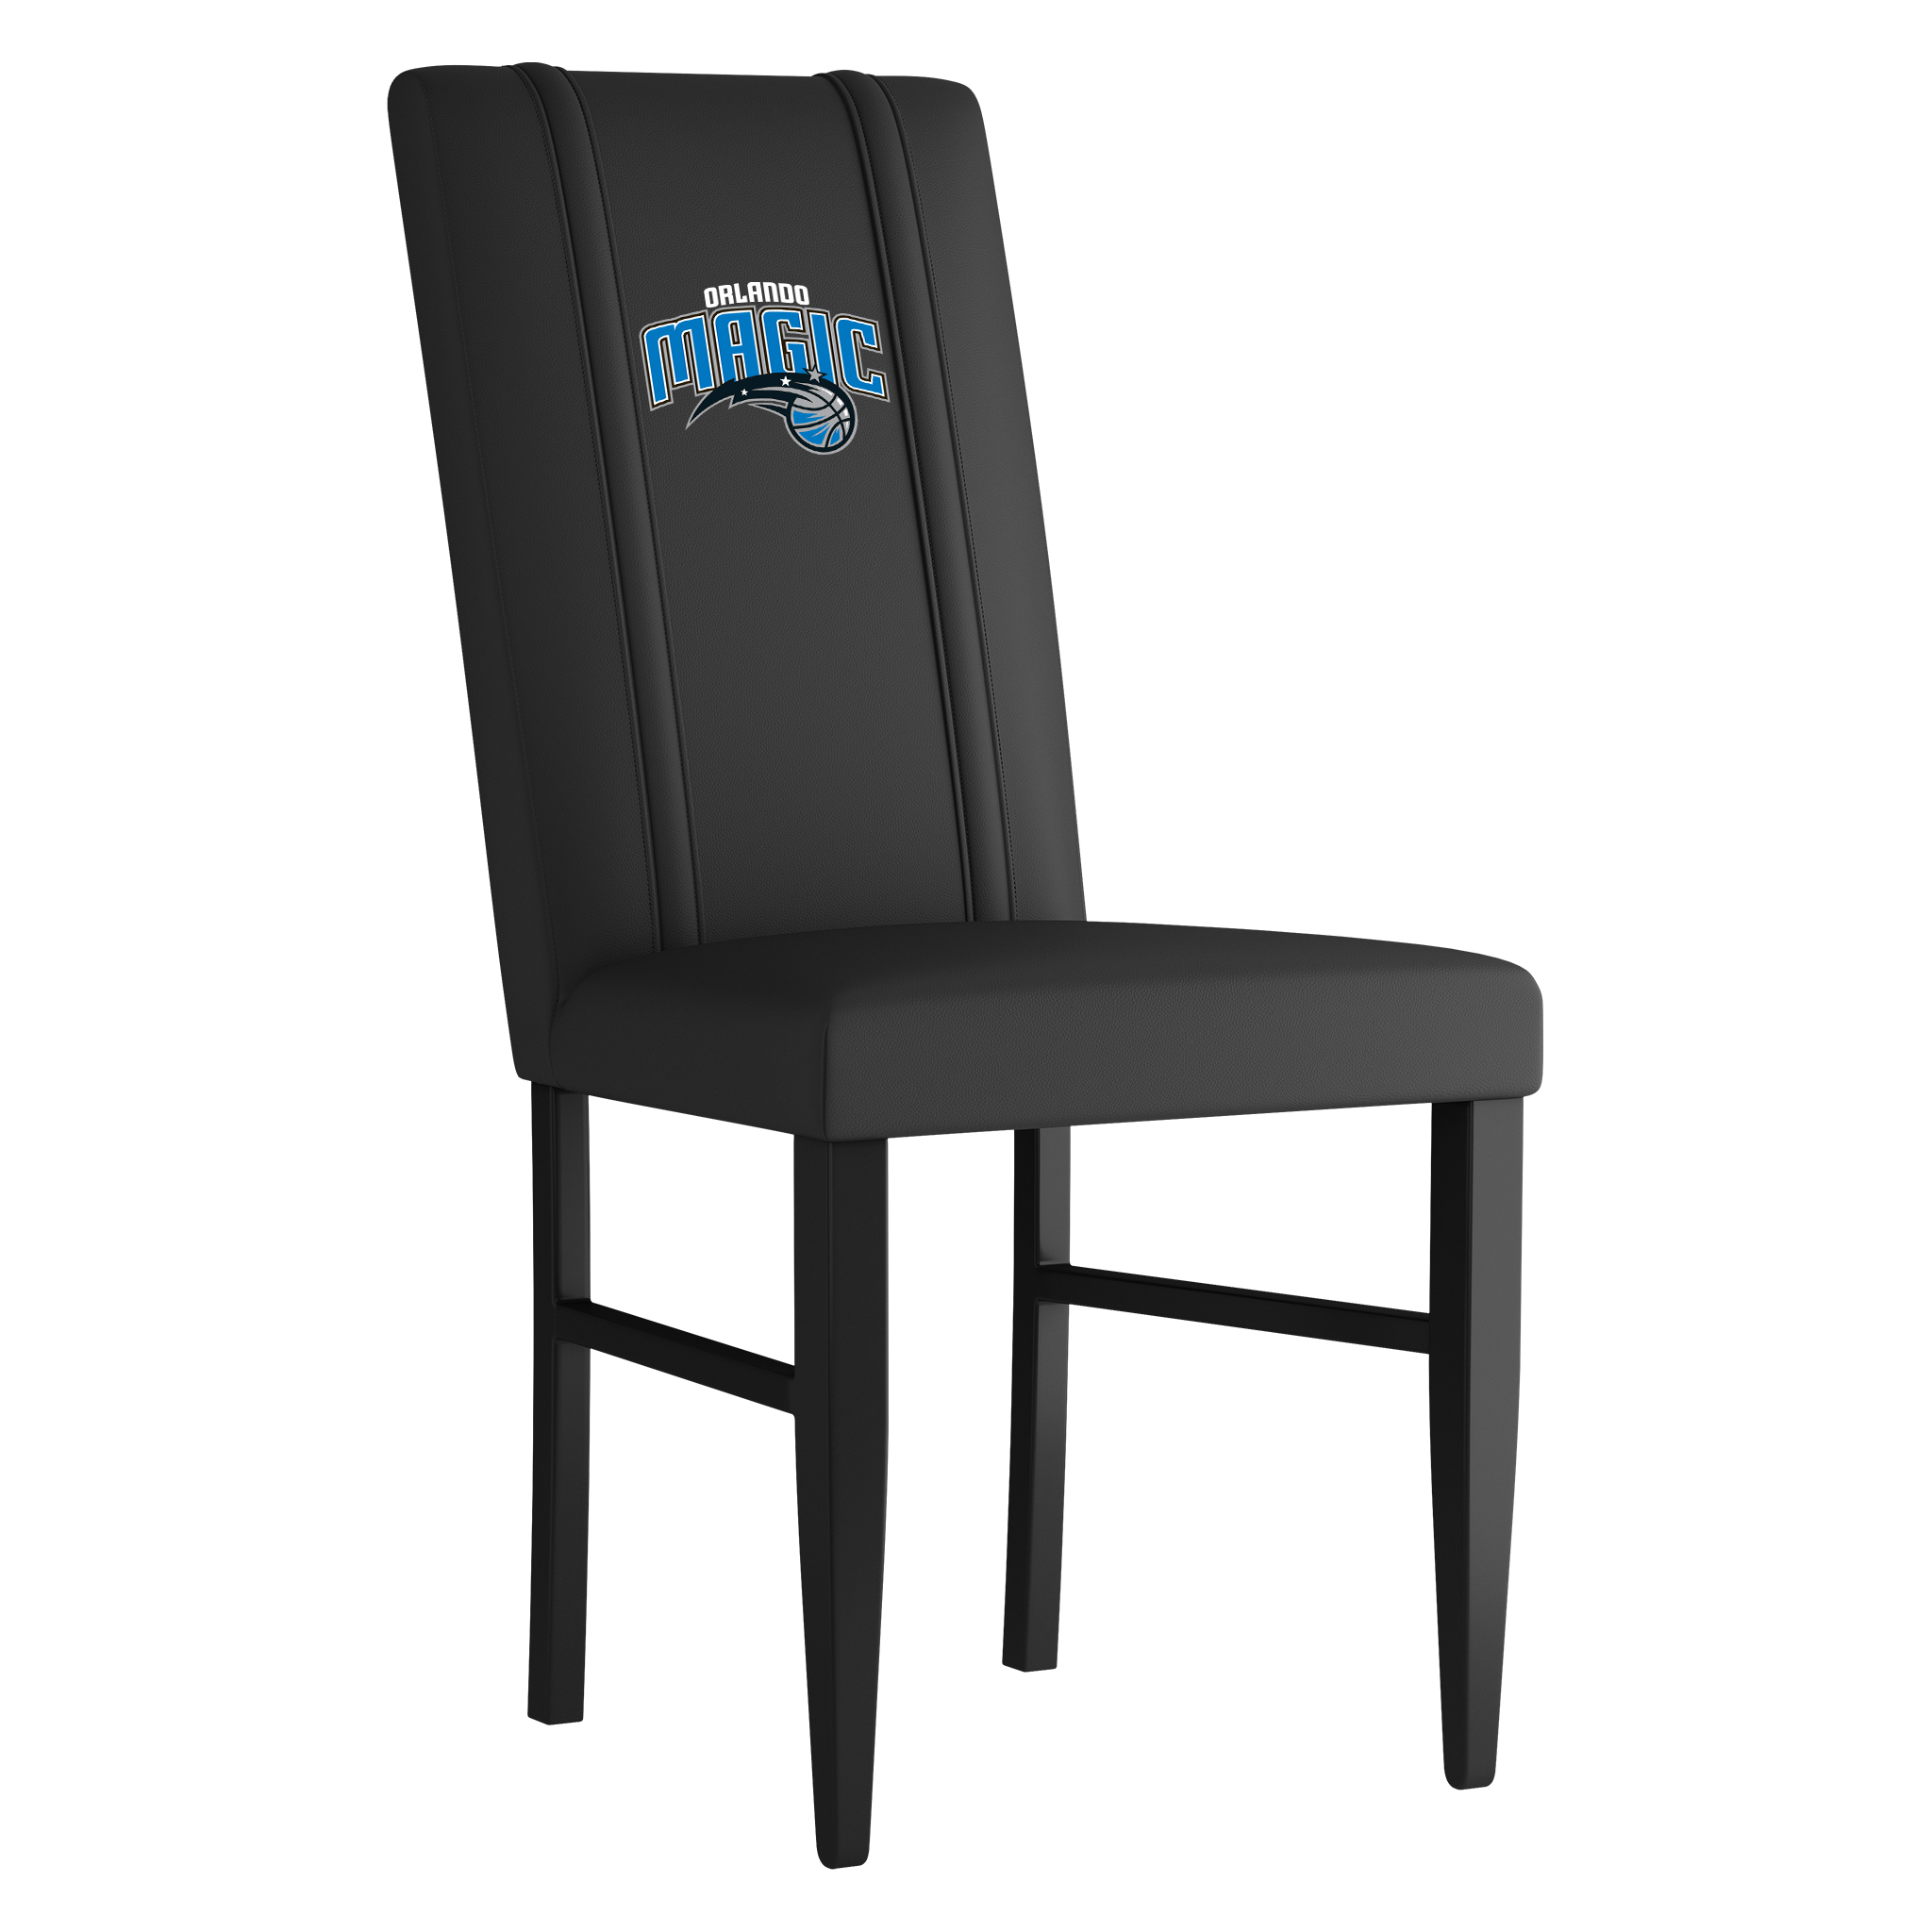 Orlando Magic Side Chair 2000 With Orlando Magic Logo